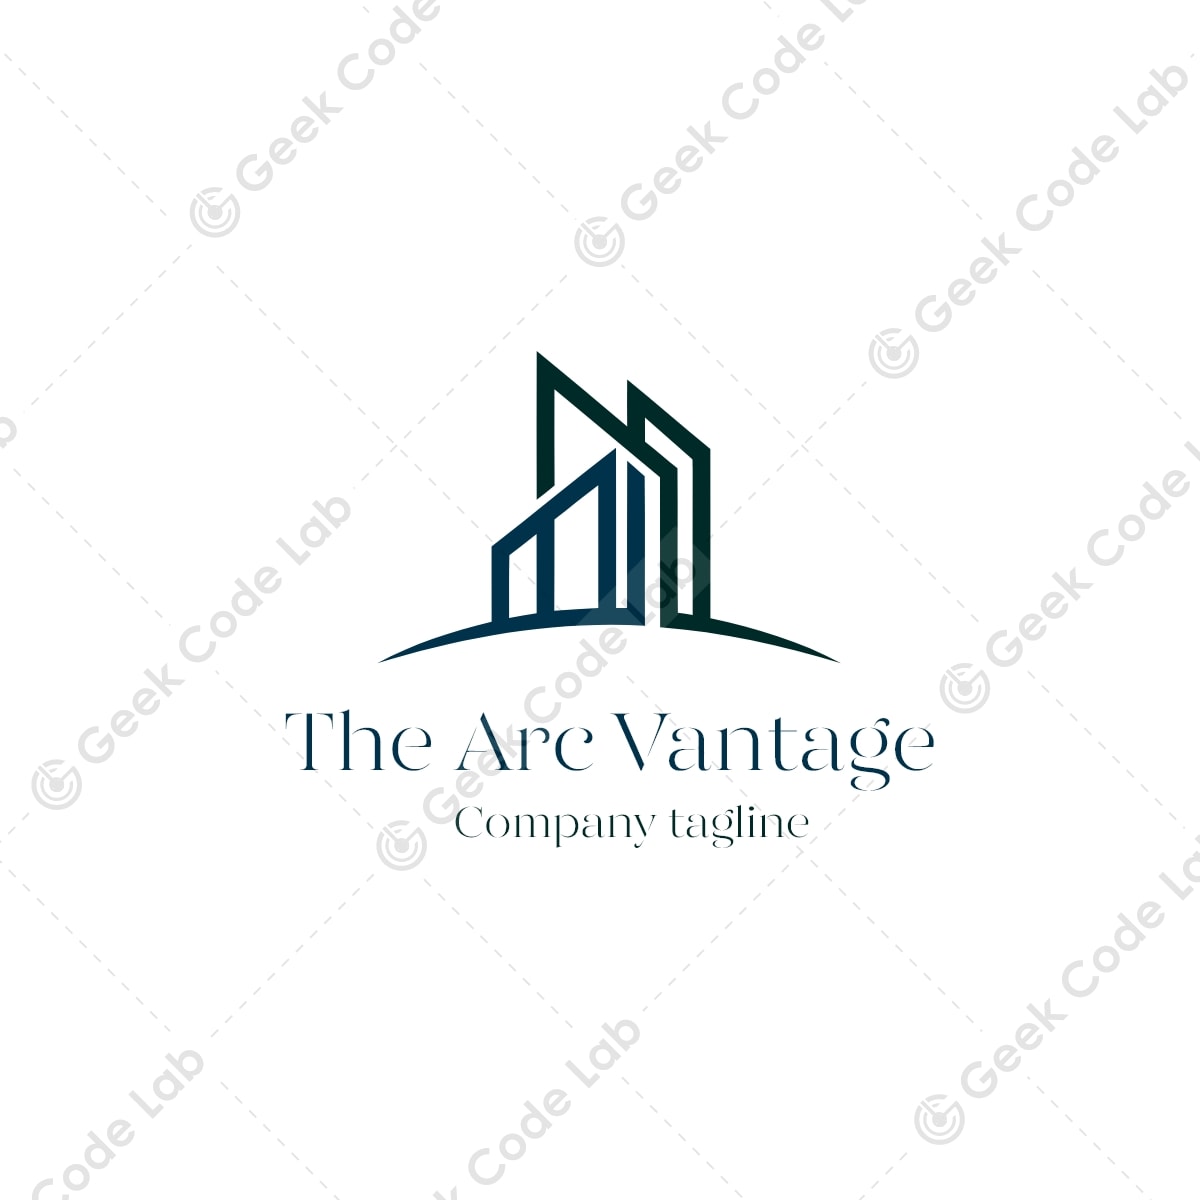 The Arc Vantage